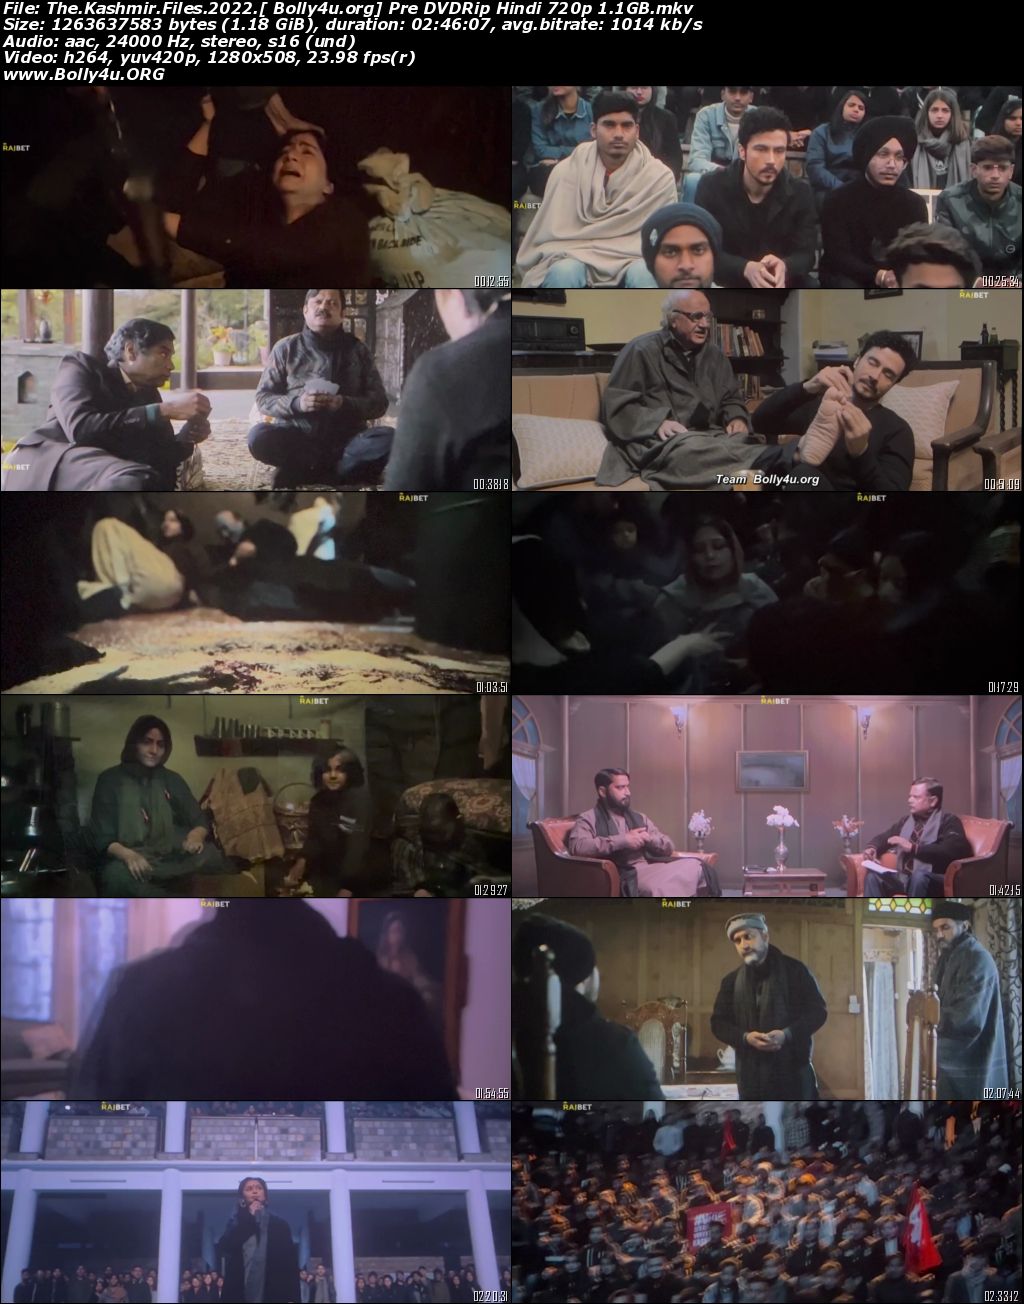 The Kashmir Files 2022 Pre DVDRip Hindi Movie Download 720p 480p